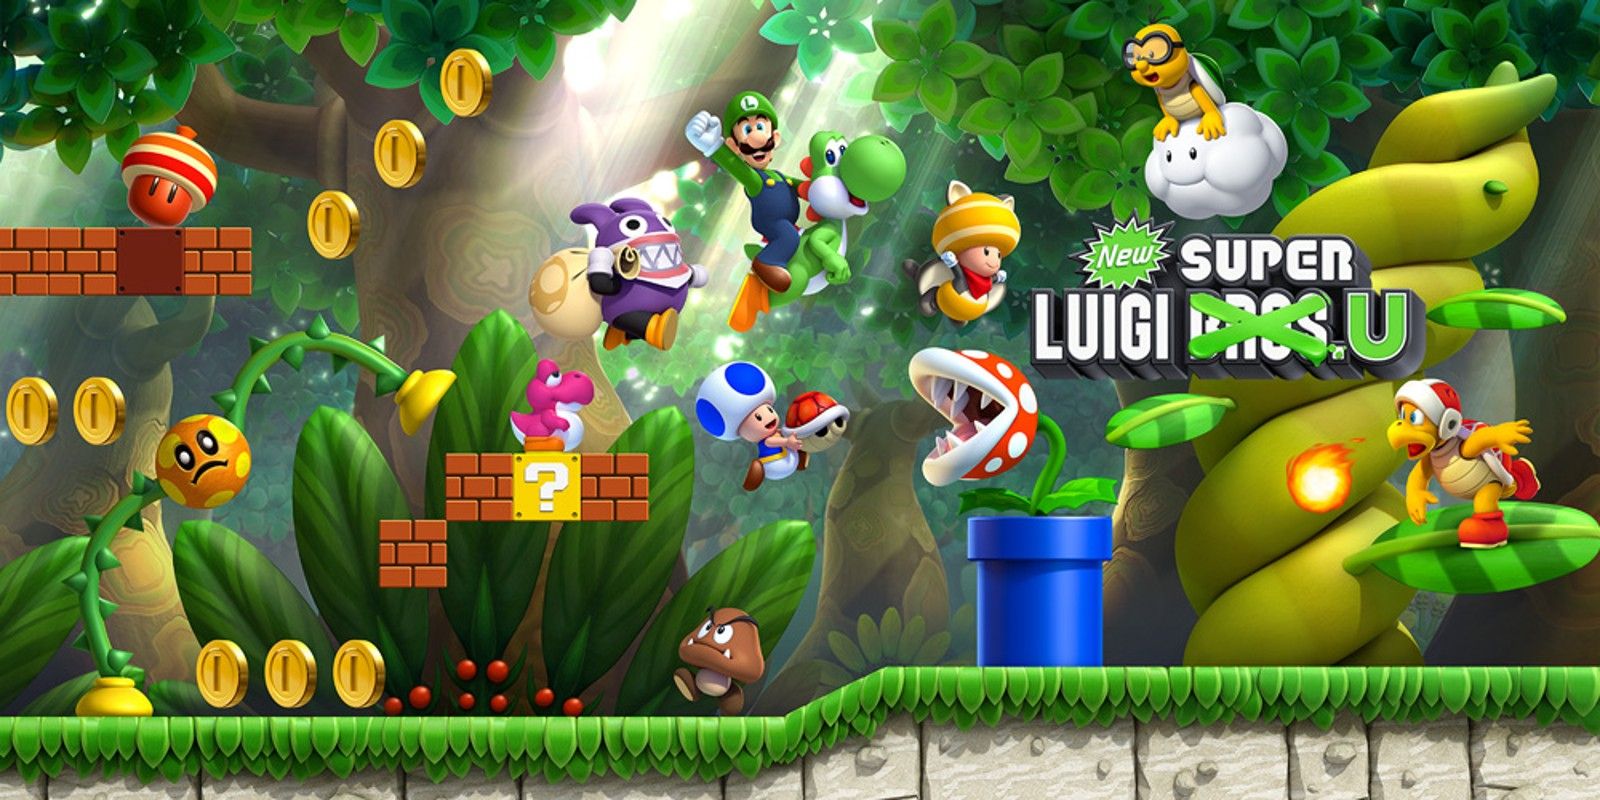 New Super Luigi U banner for the Wii U